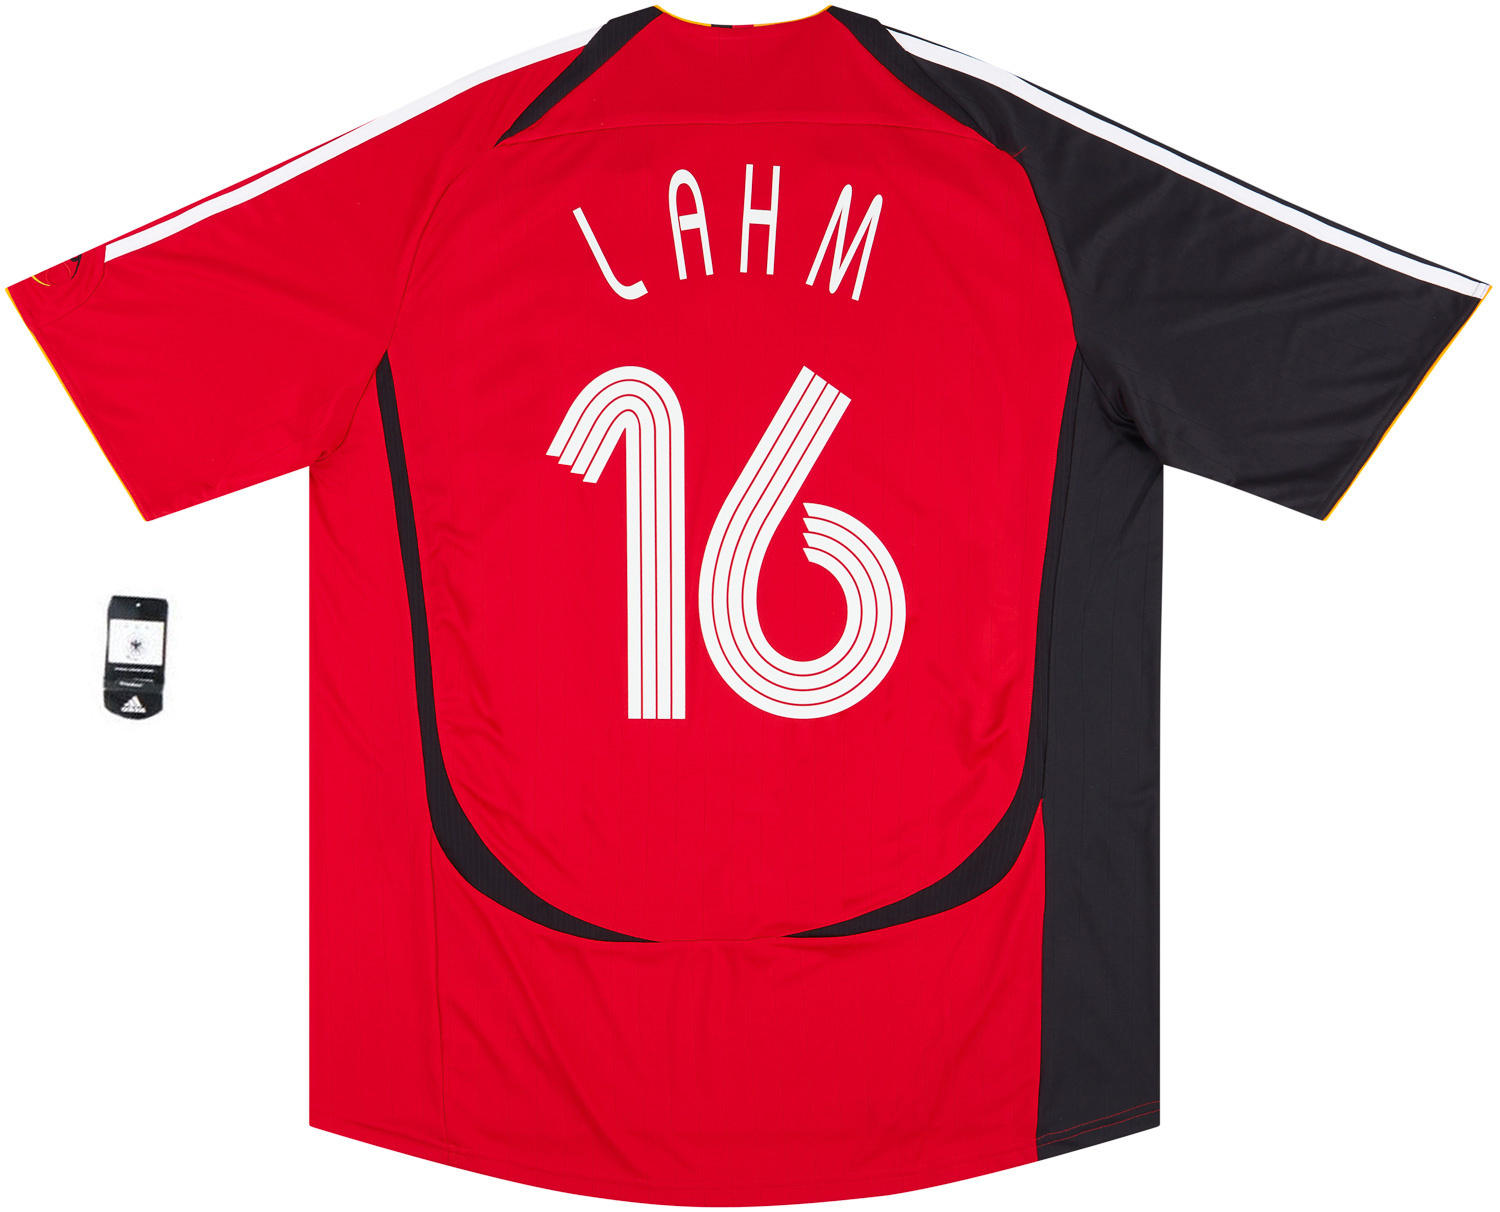 Lahm #16 Germany World Cup 2006 Away Football Nameset for shirt 